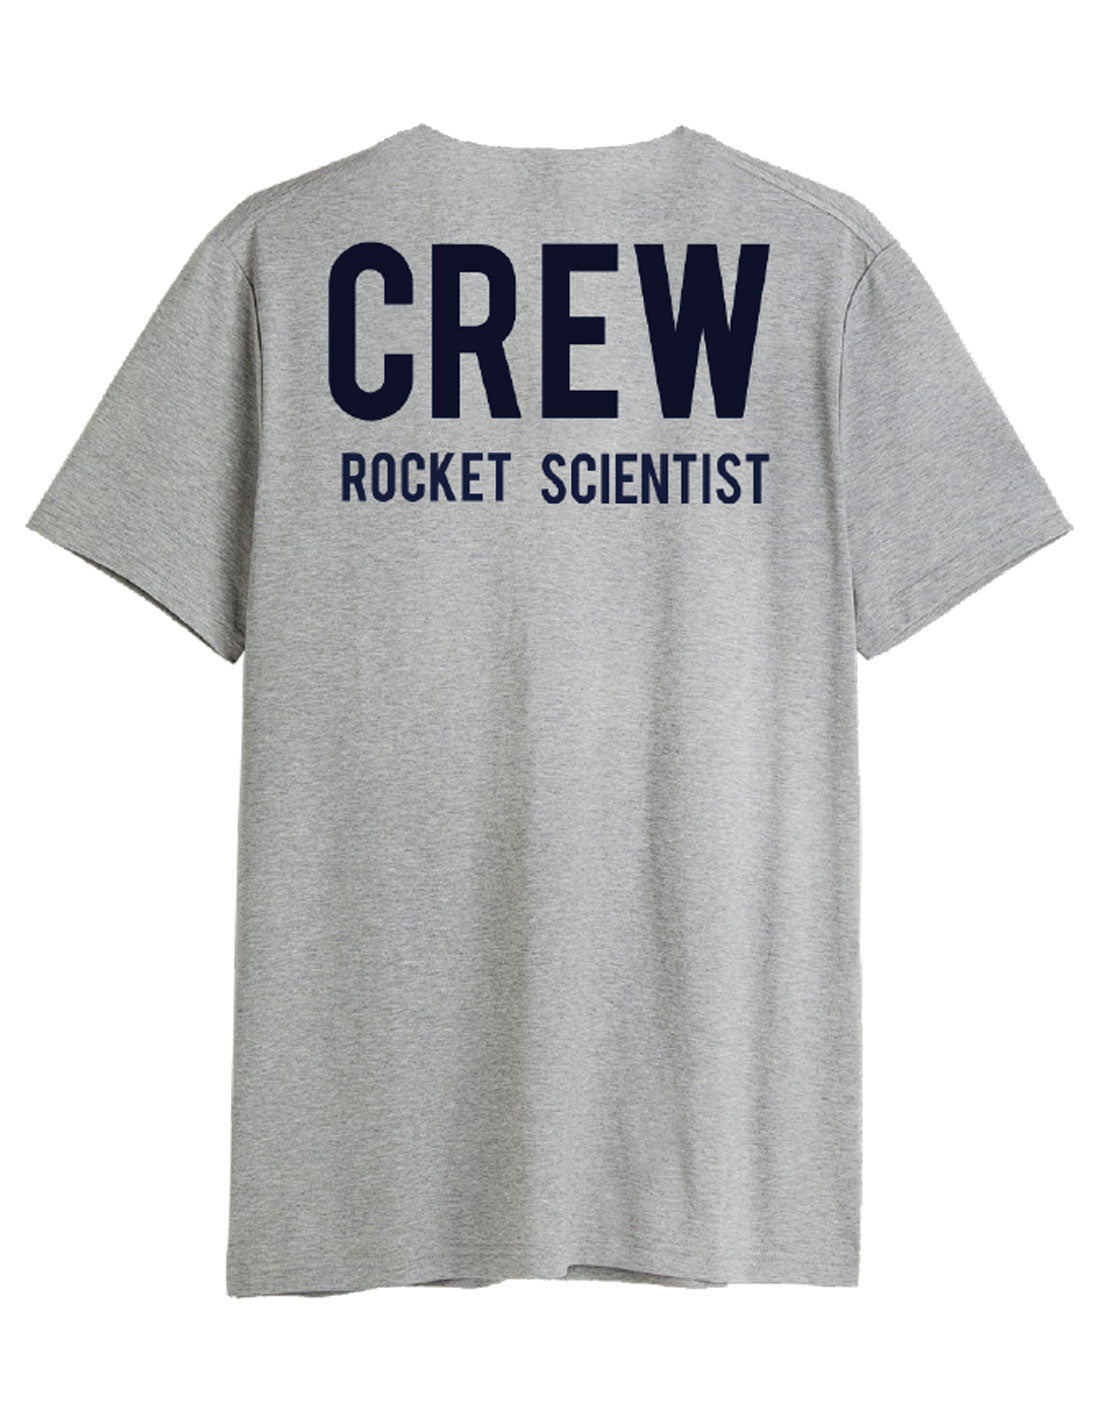 NASA t-shirt - Rocket Scientist CREW